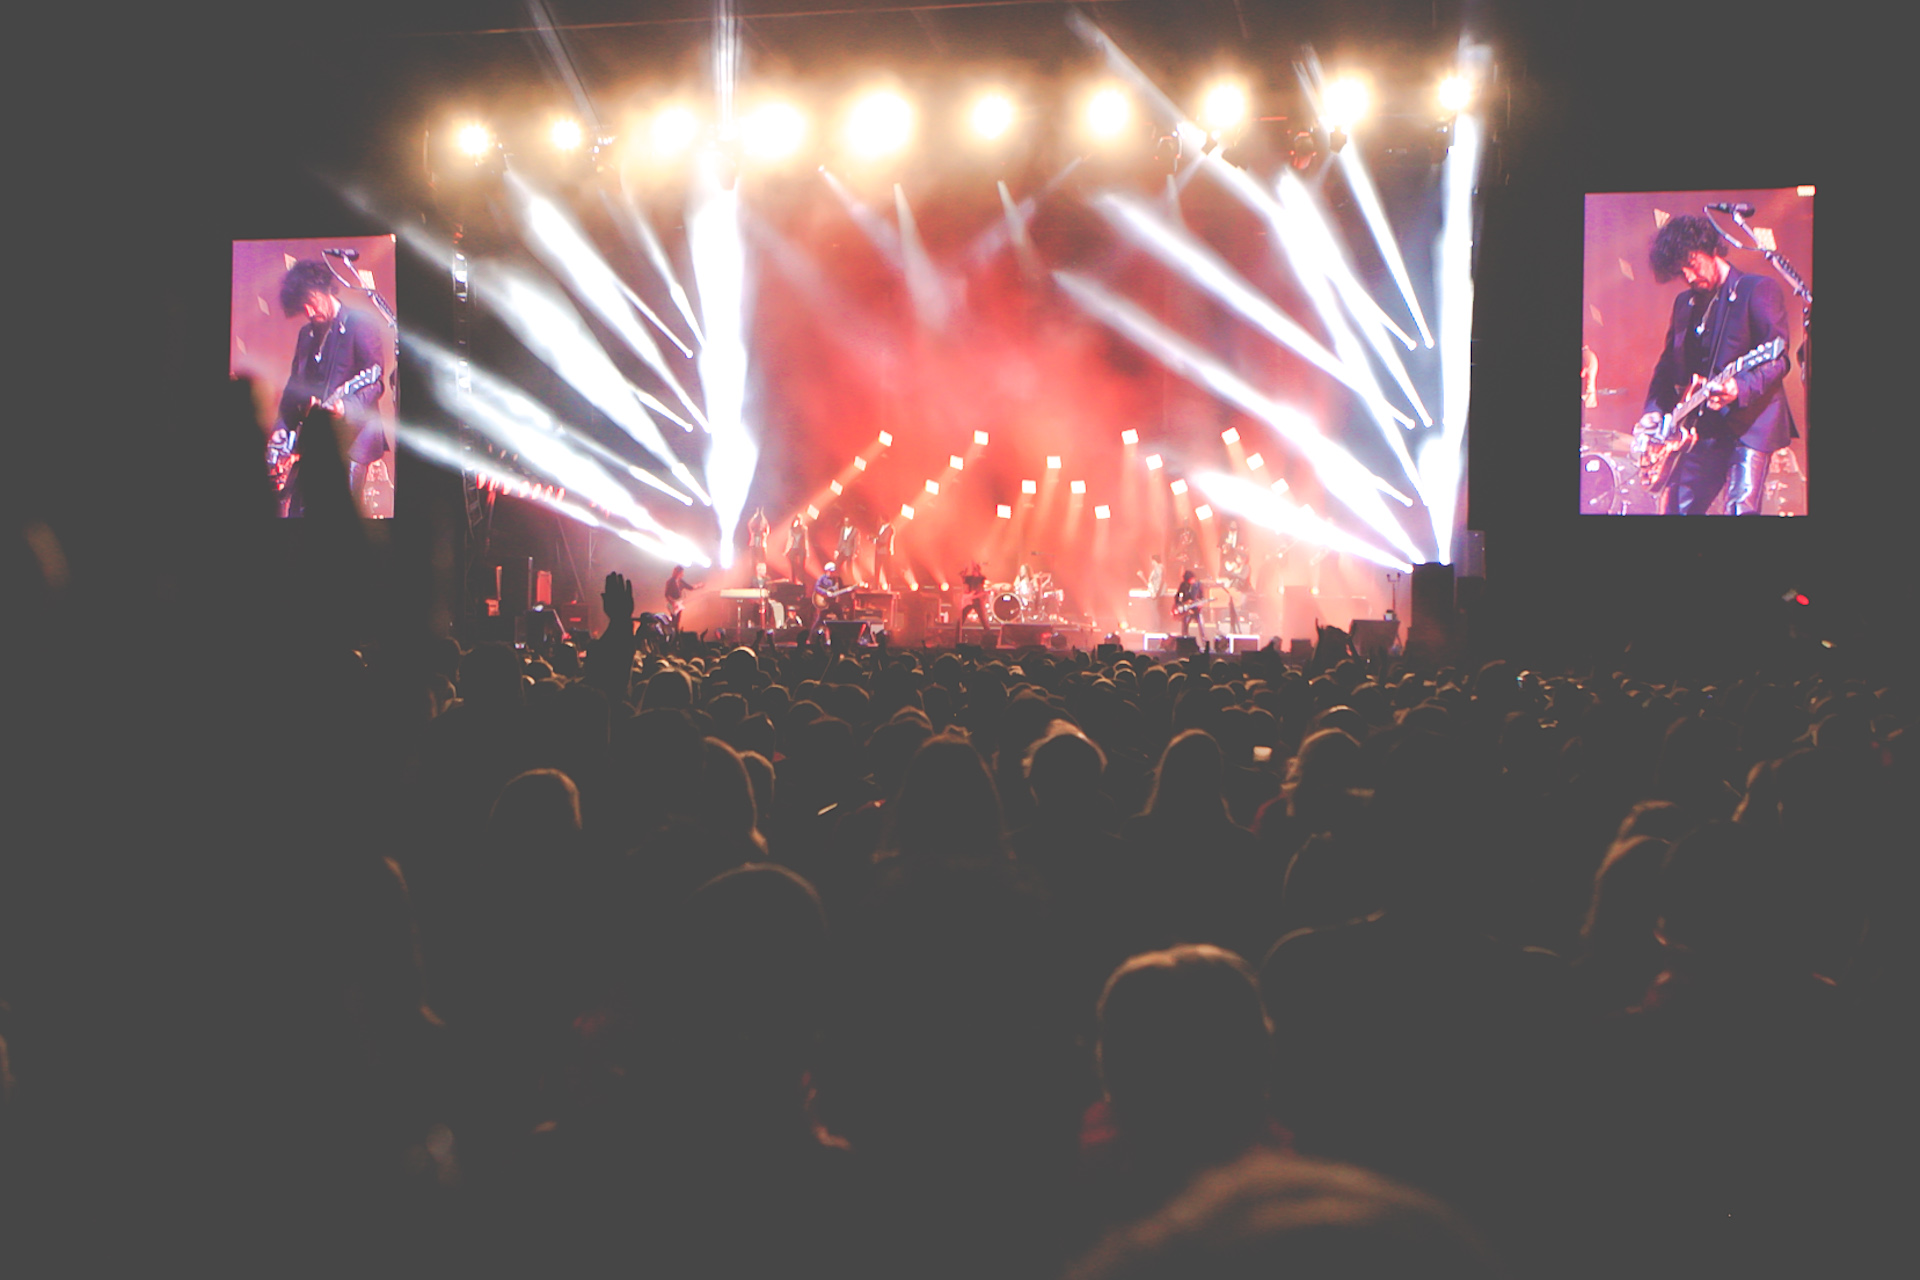 Le BIG Festival avec Johnny Hallyday le 17 juillet 2015 - photo 4